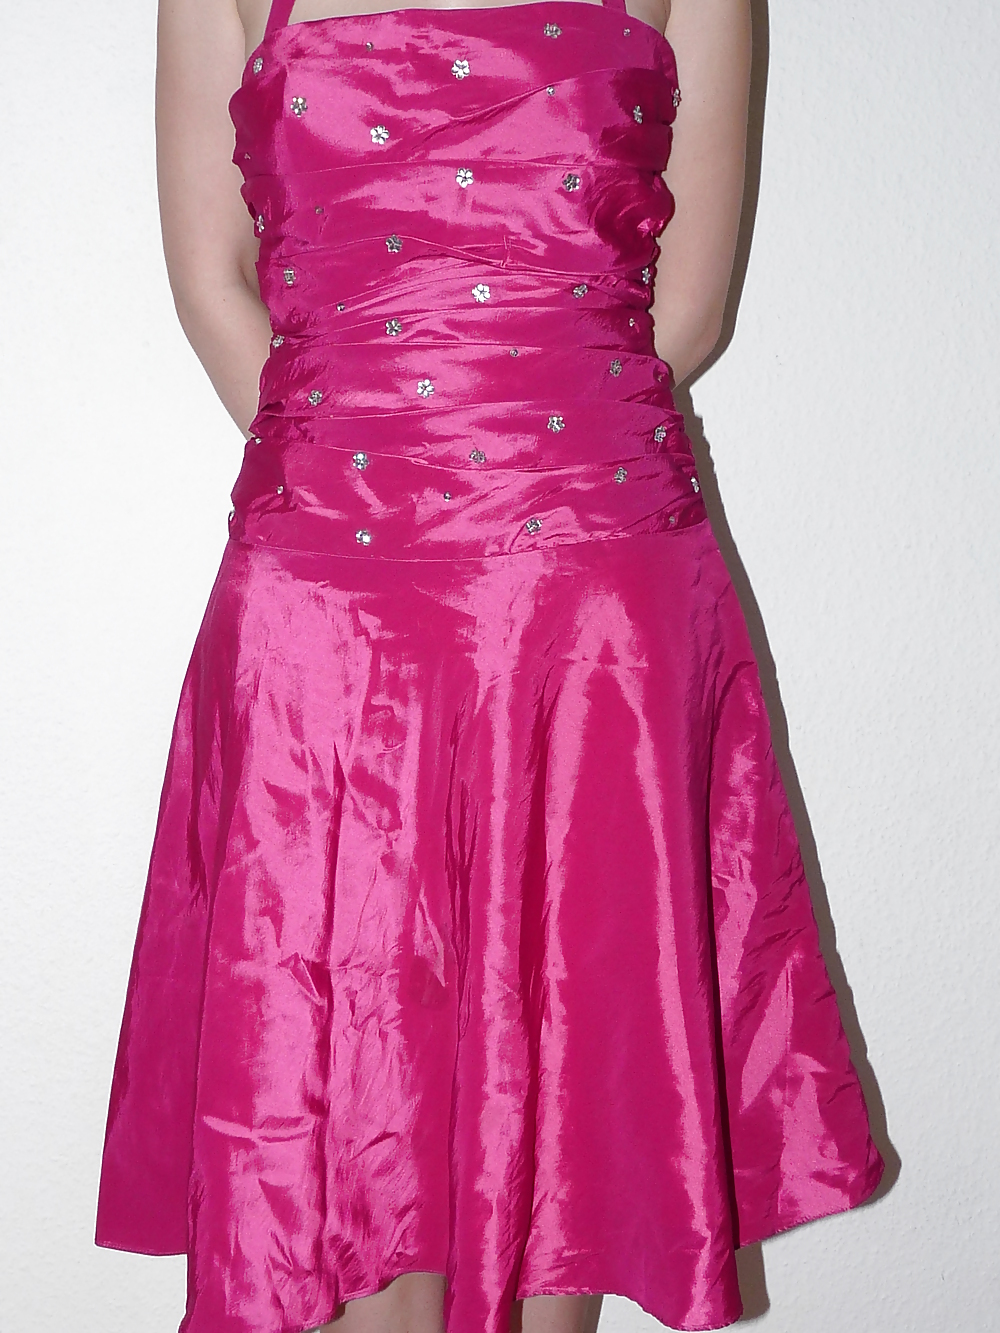 Moglie rosa seta raso lucido barbie vestito
 #17656716